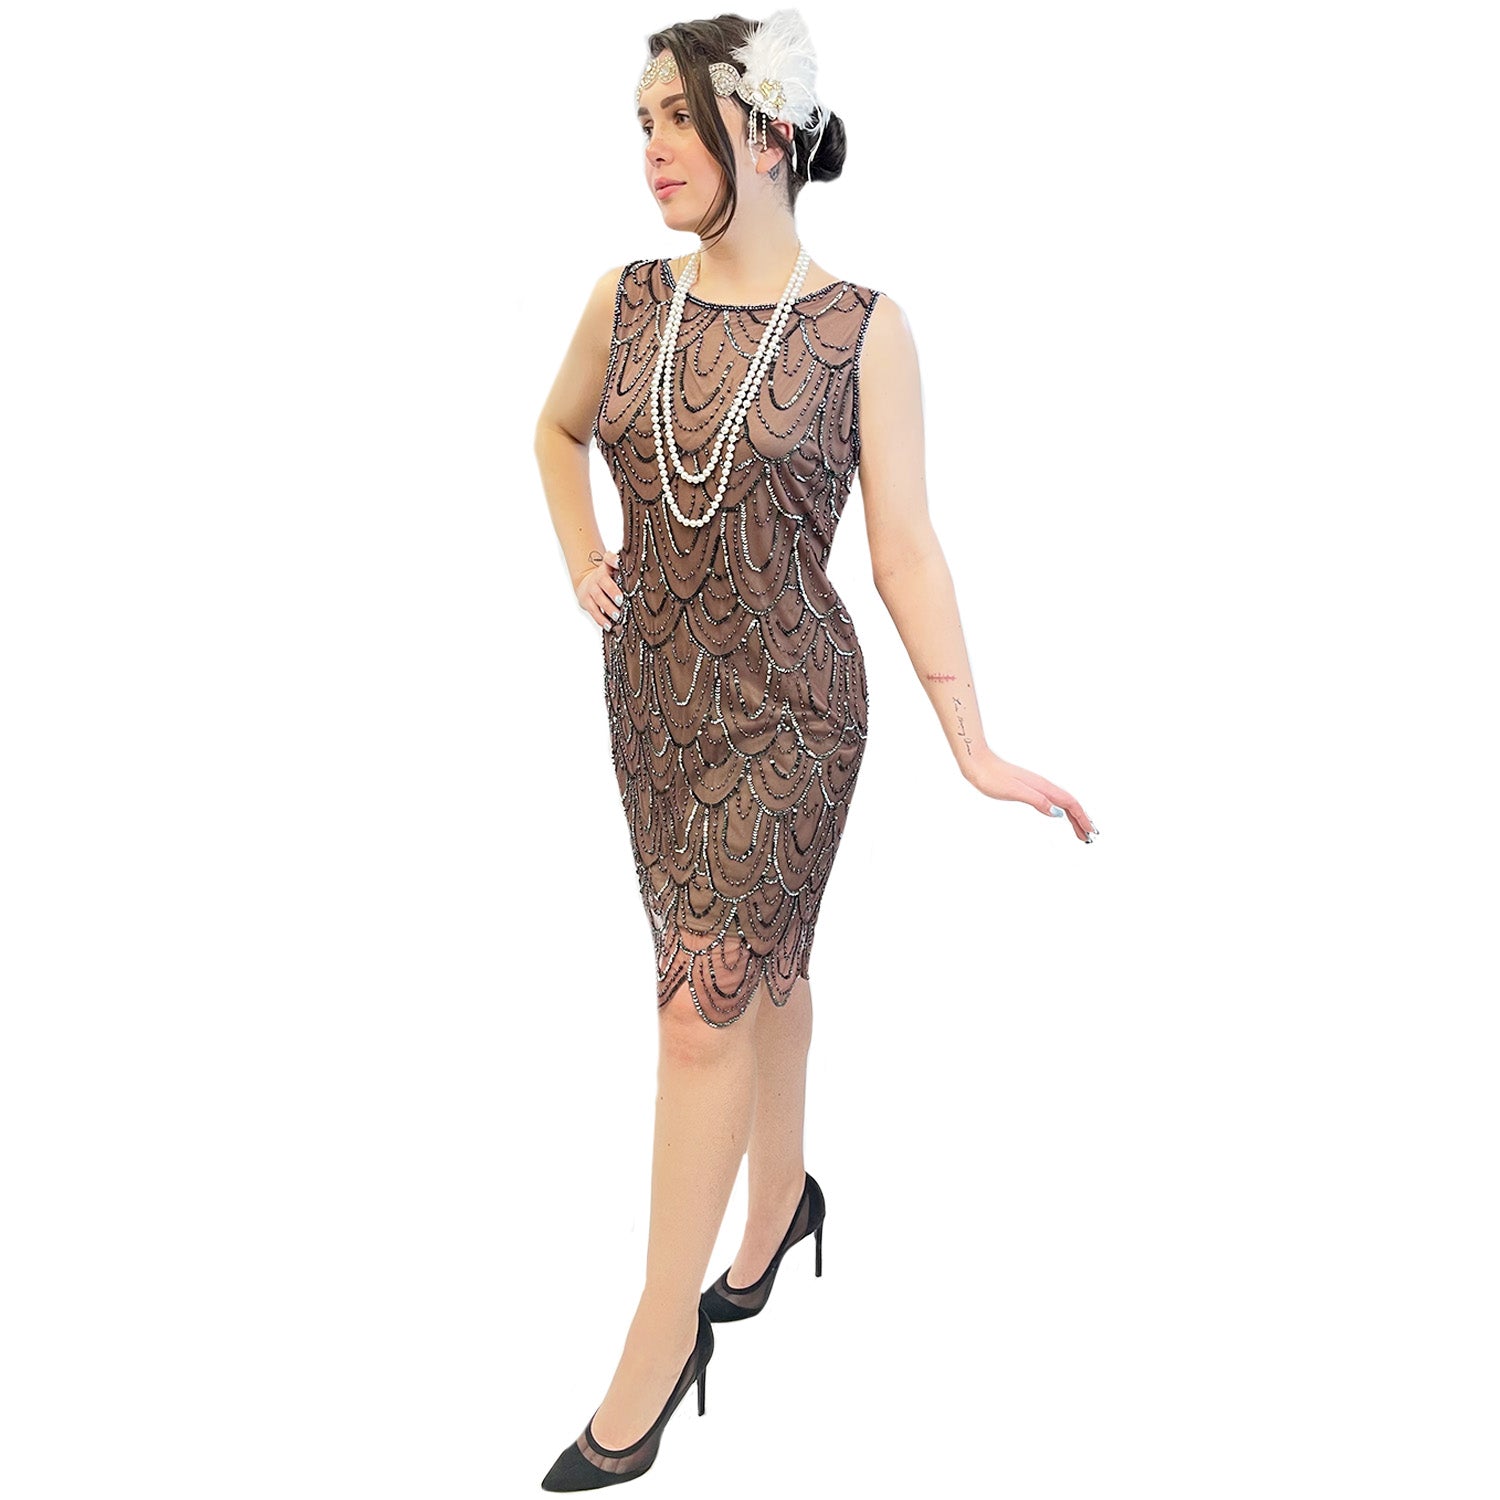 Classic 1920s Scalloped Sequin Flapper Dress Women's Adult Costume